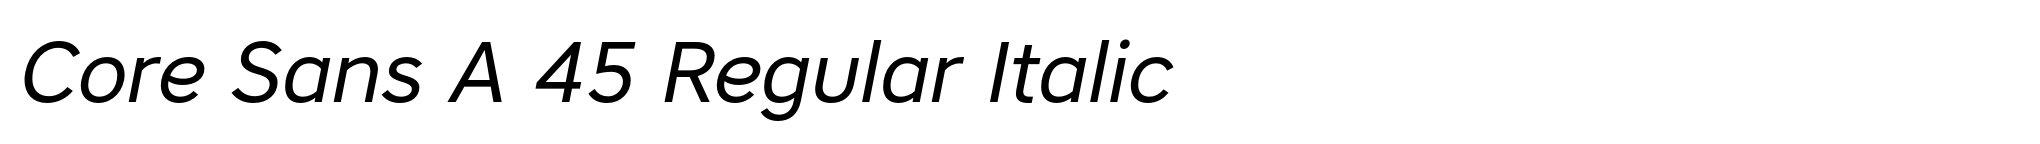 Core Sans A 45 Regular Italic image